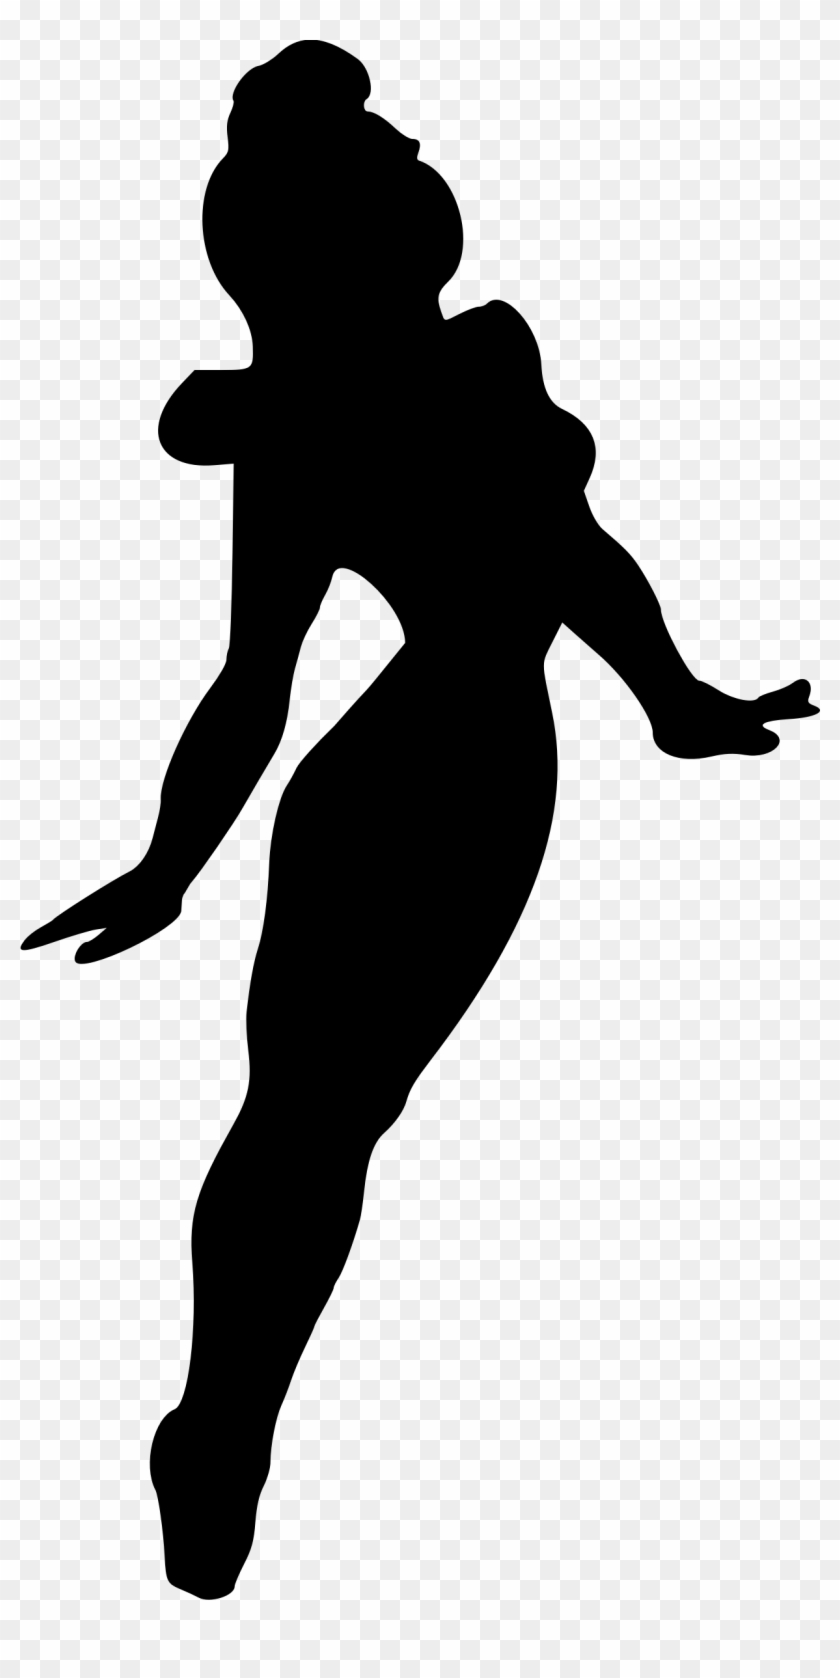 Woman Dancing Silhouette - Woman Dance Silhouette Clipart #1976596